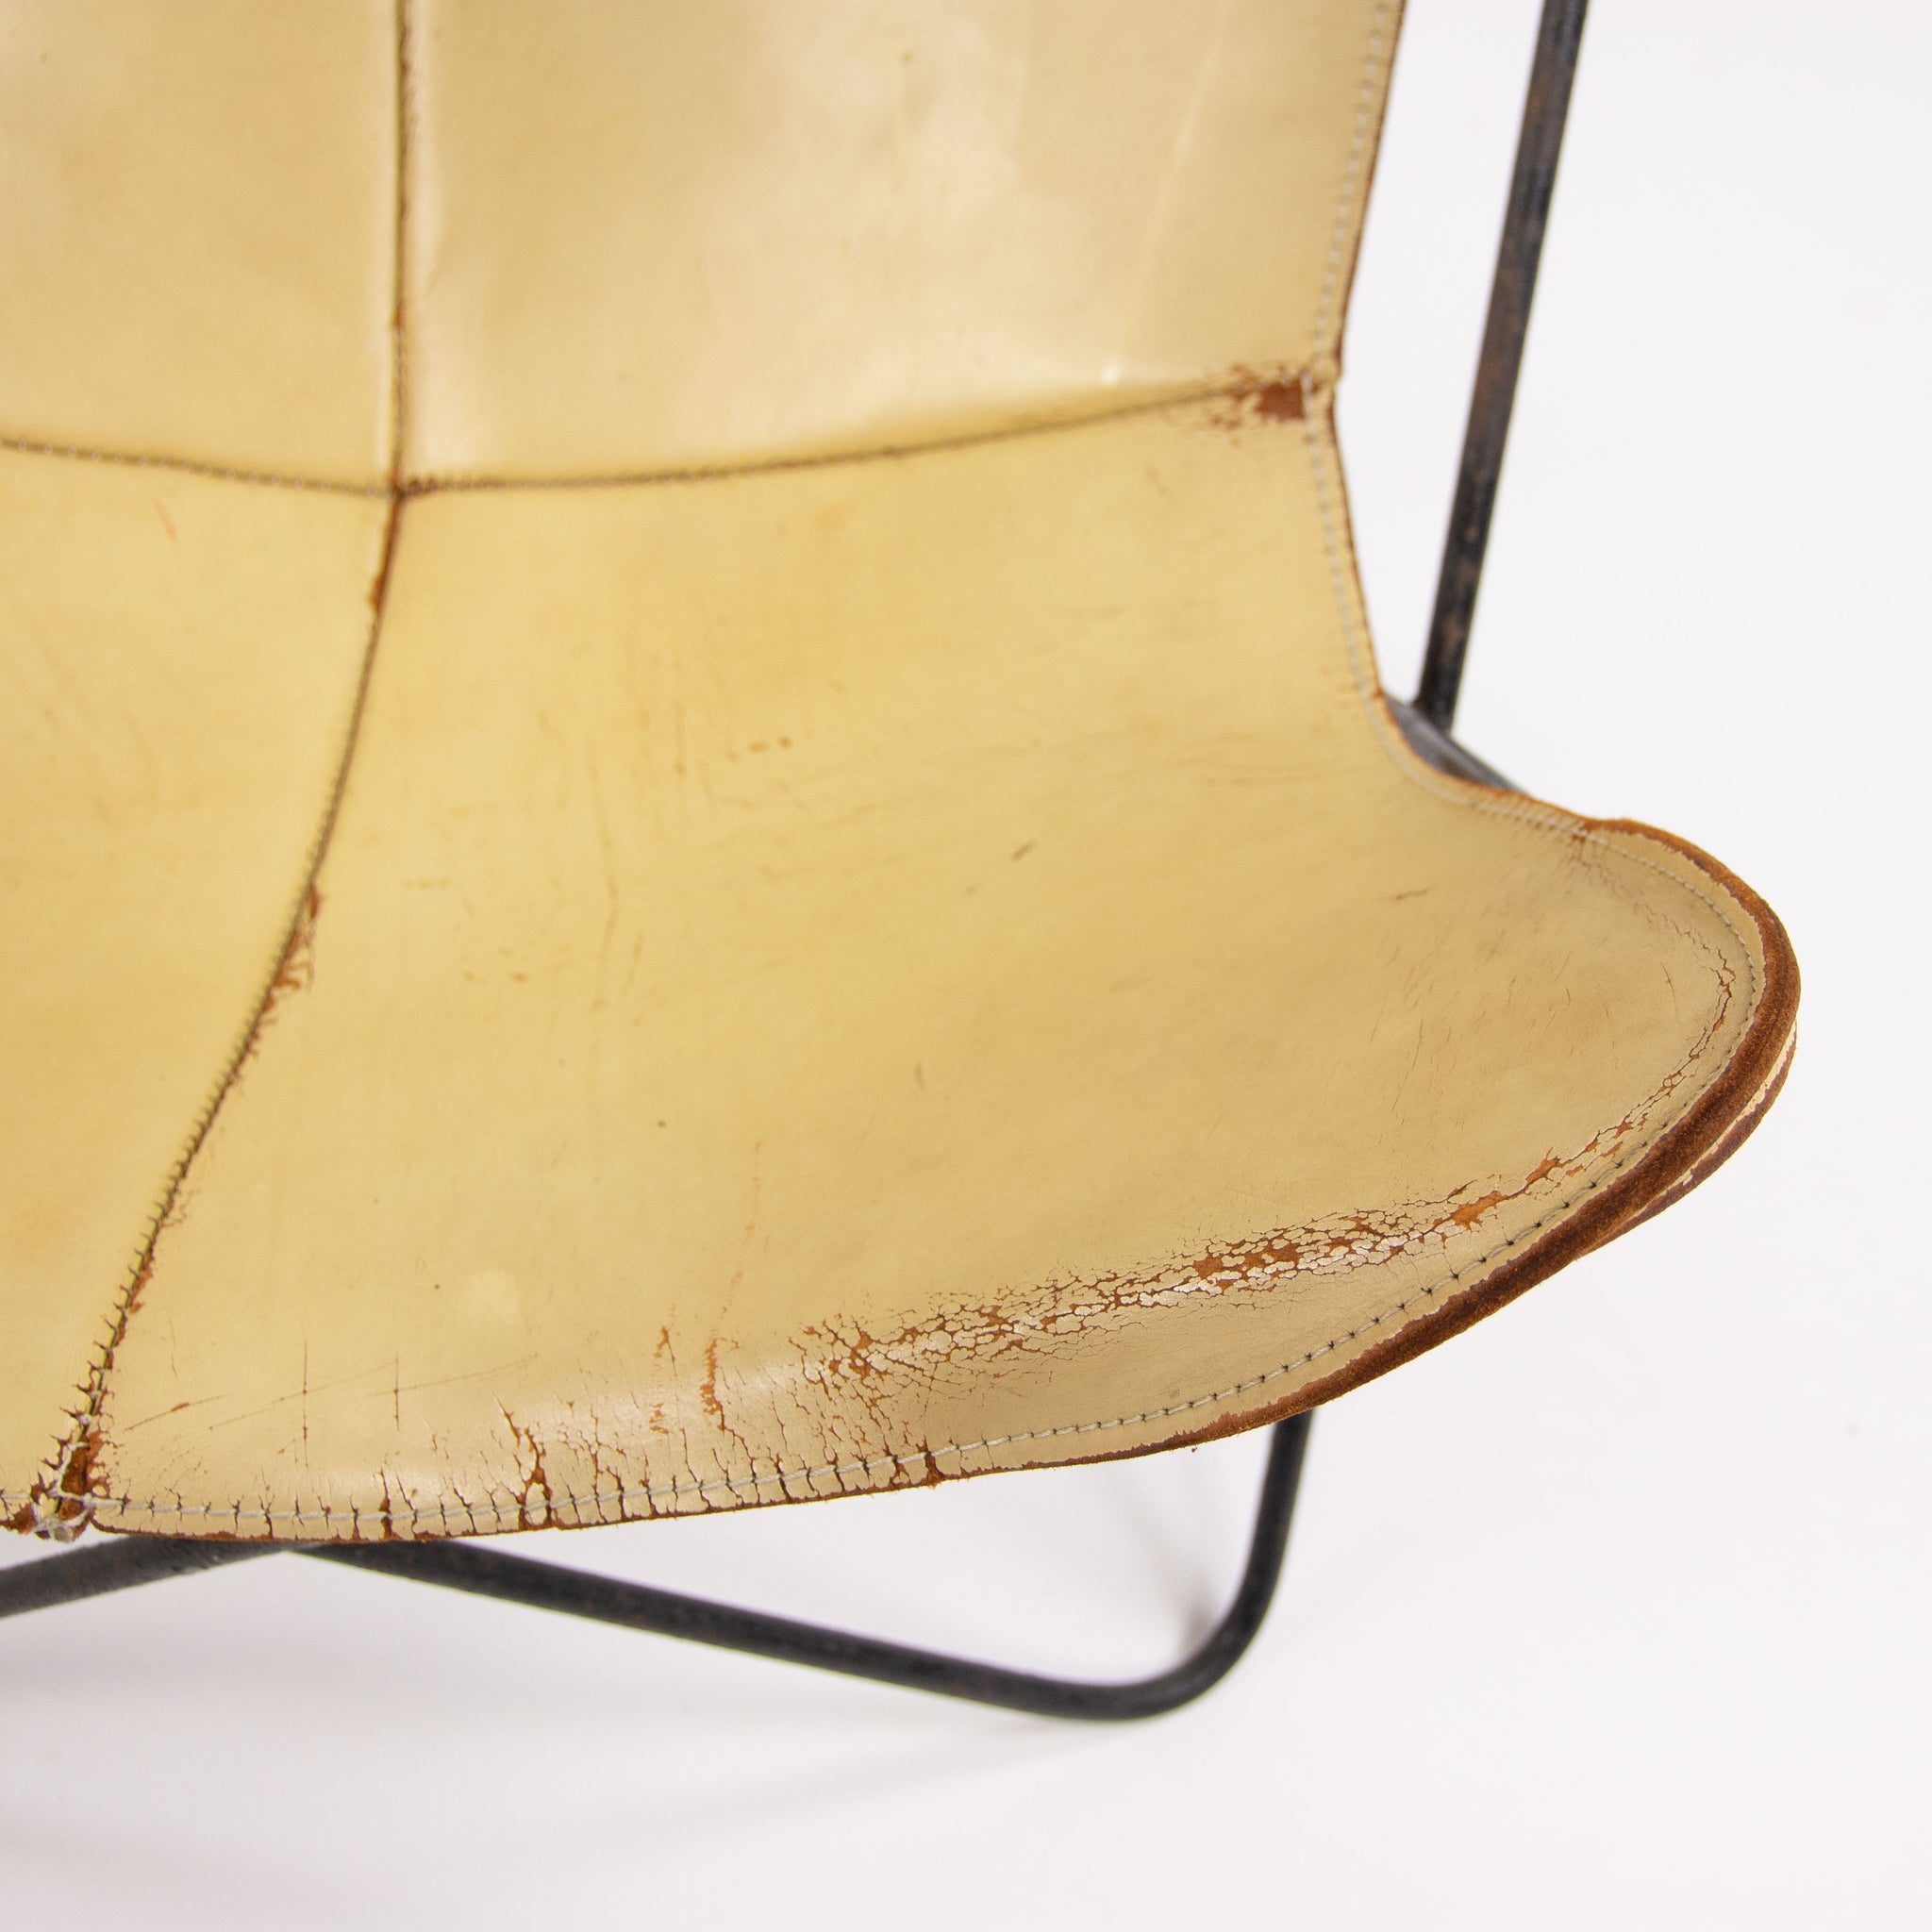 SOLD 1950's Vintage Knoll International BKF Butterfly Chair Jorge Ferrari Hardoy